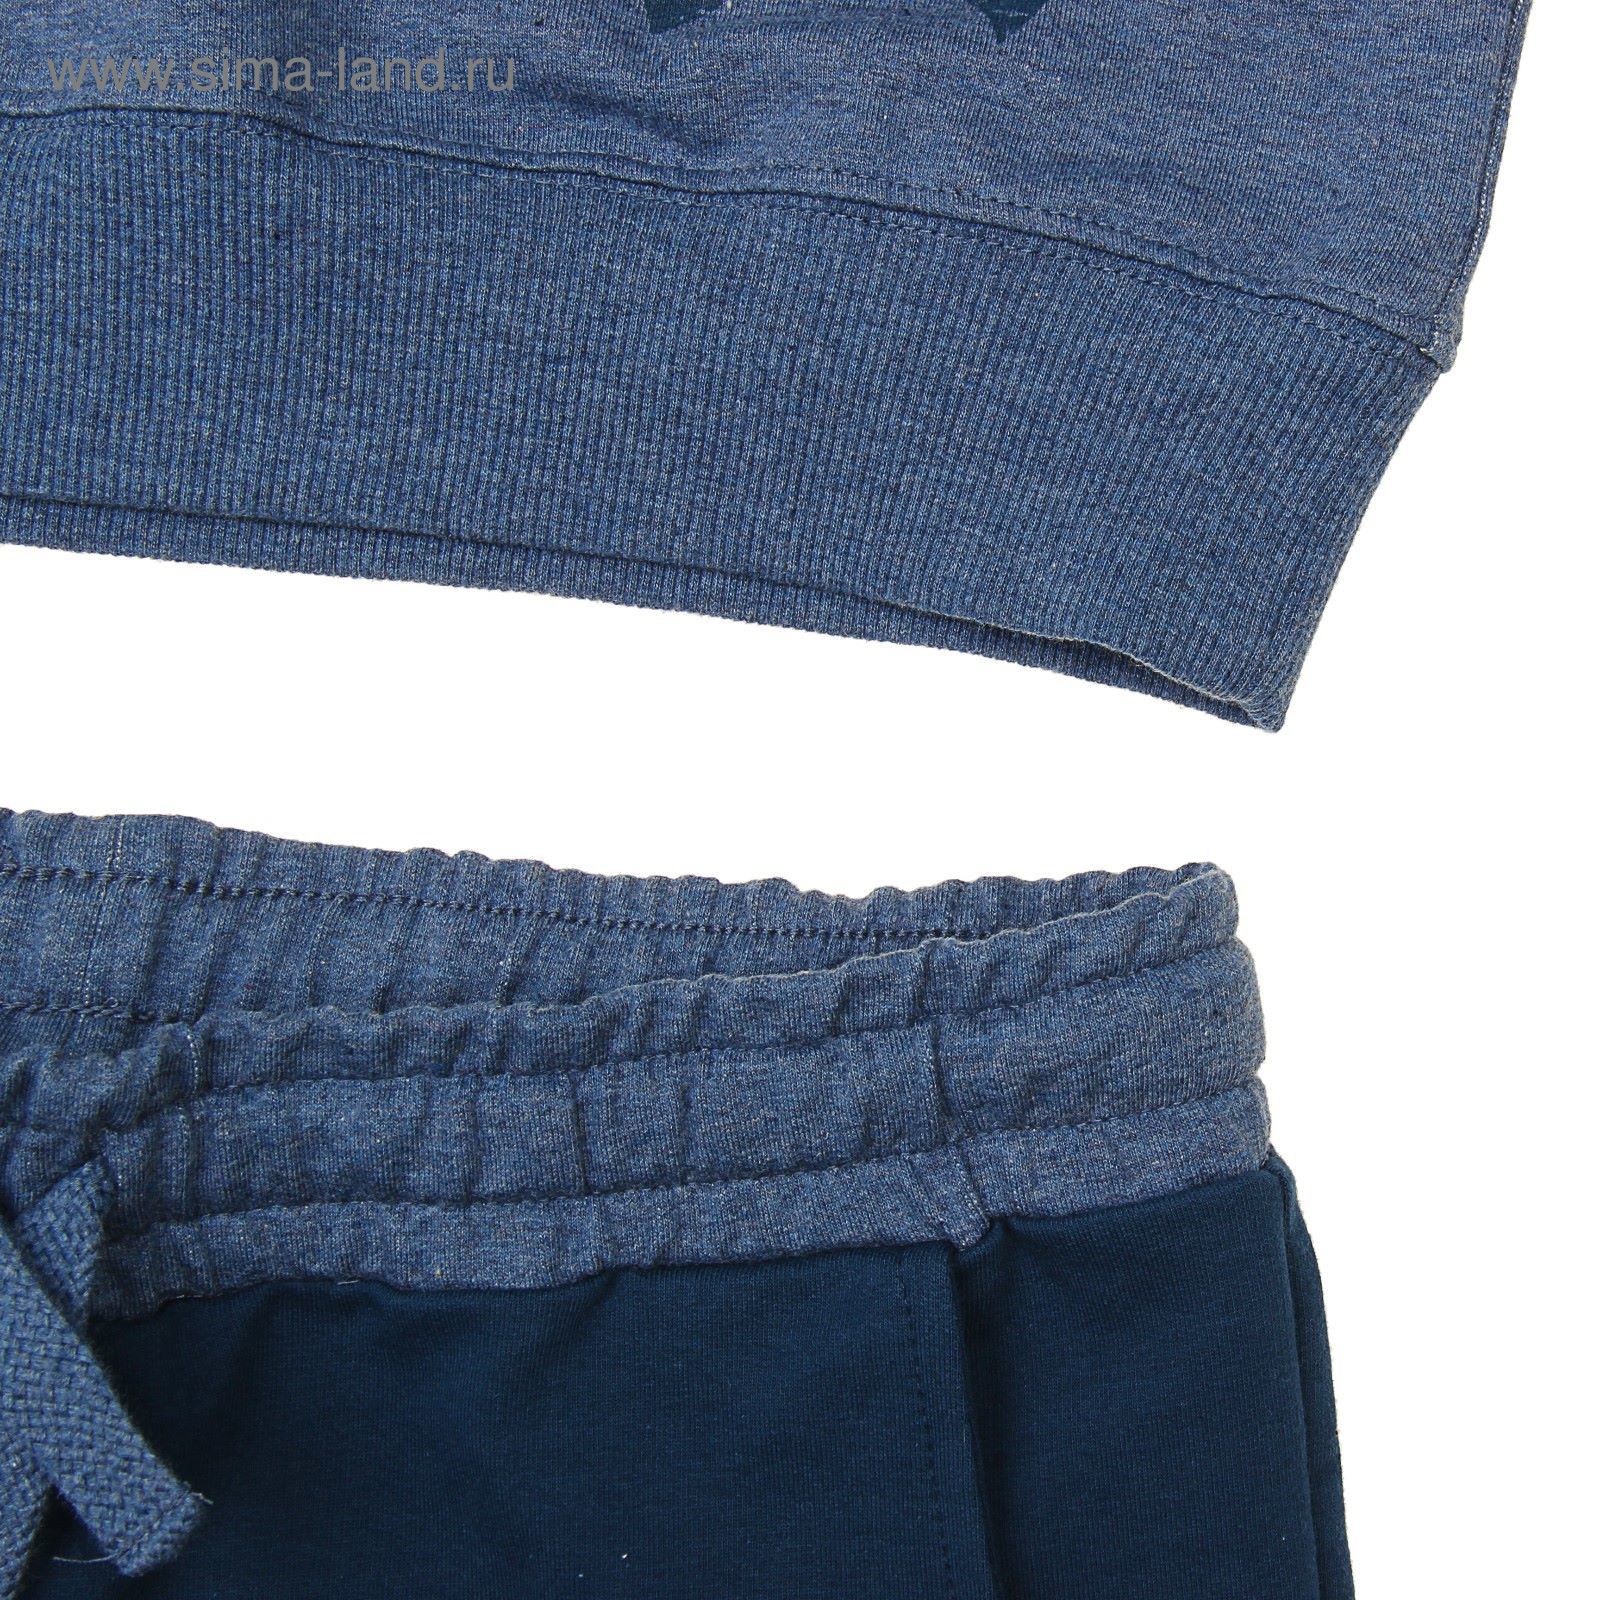 Комплект для мальчика (толстовка, брюки), рост 110-116 см, цвет синий меланж 184-М